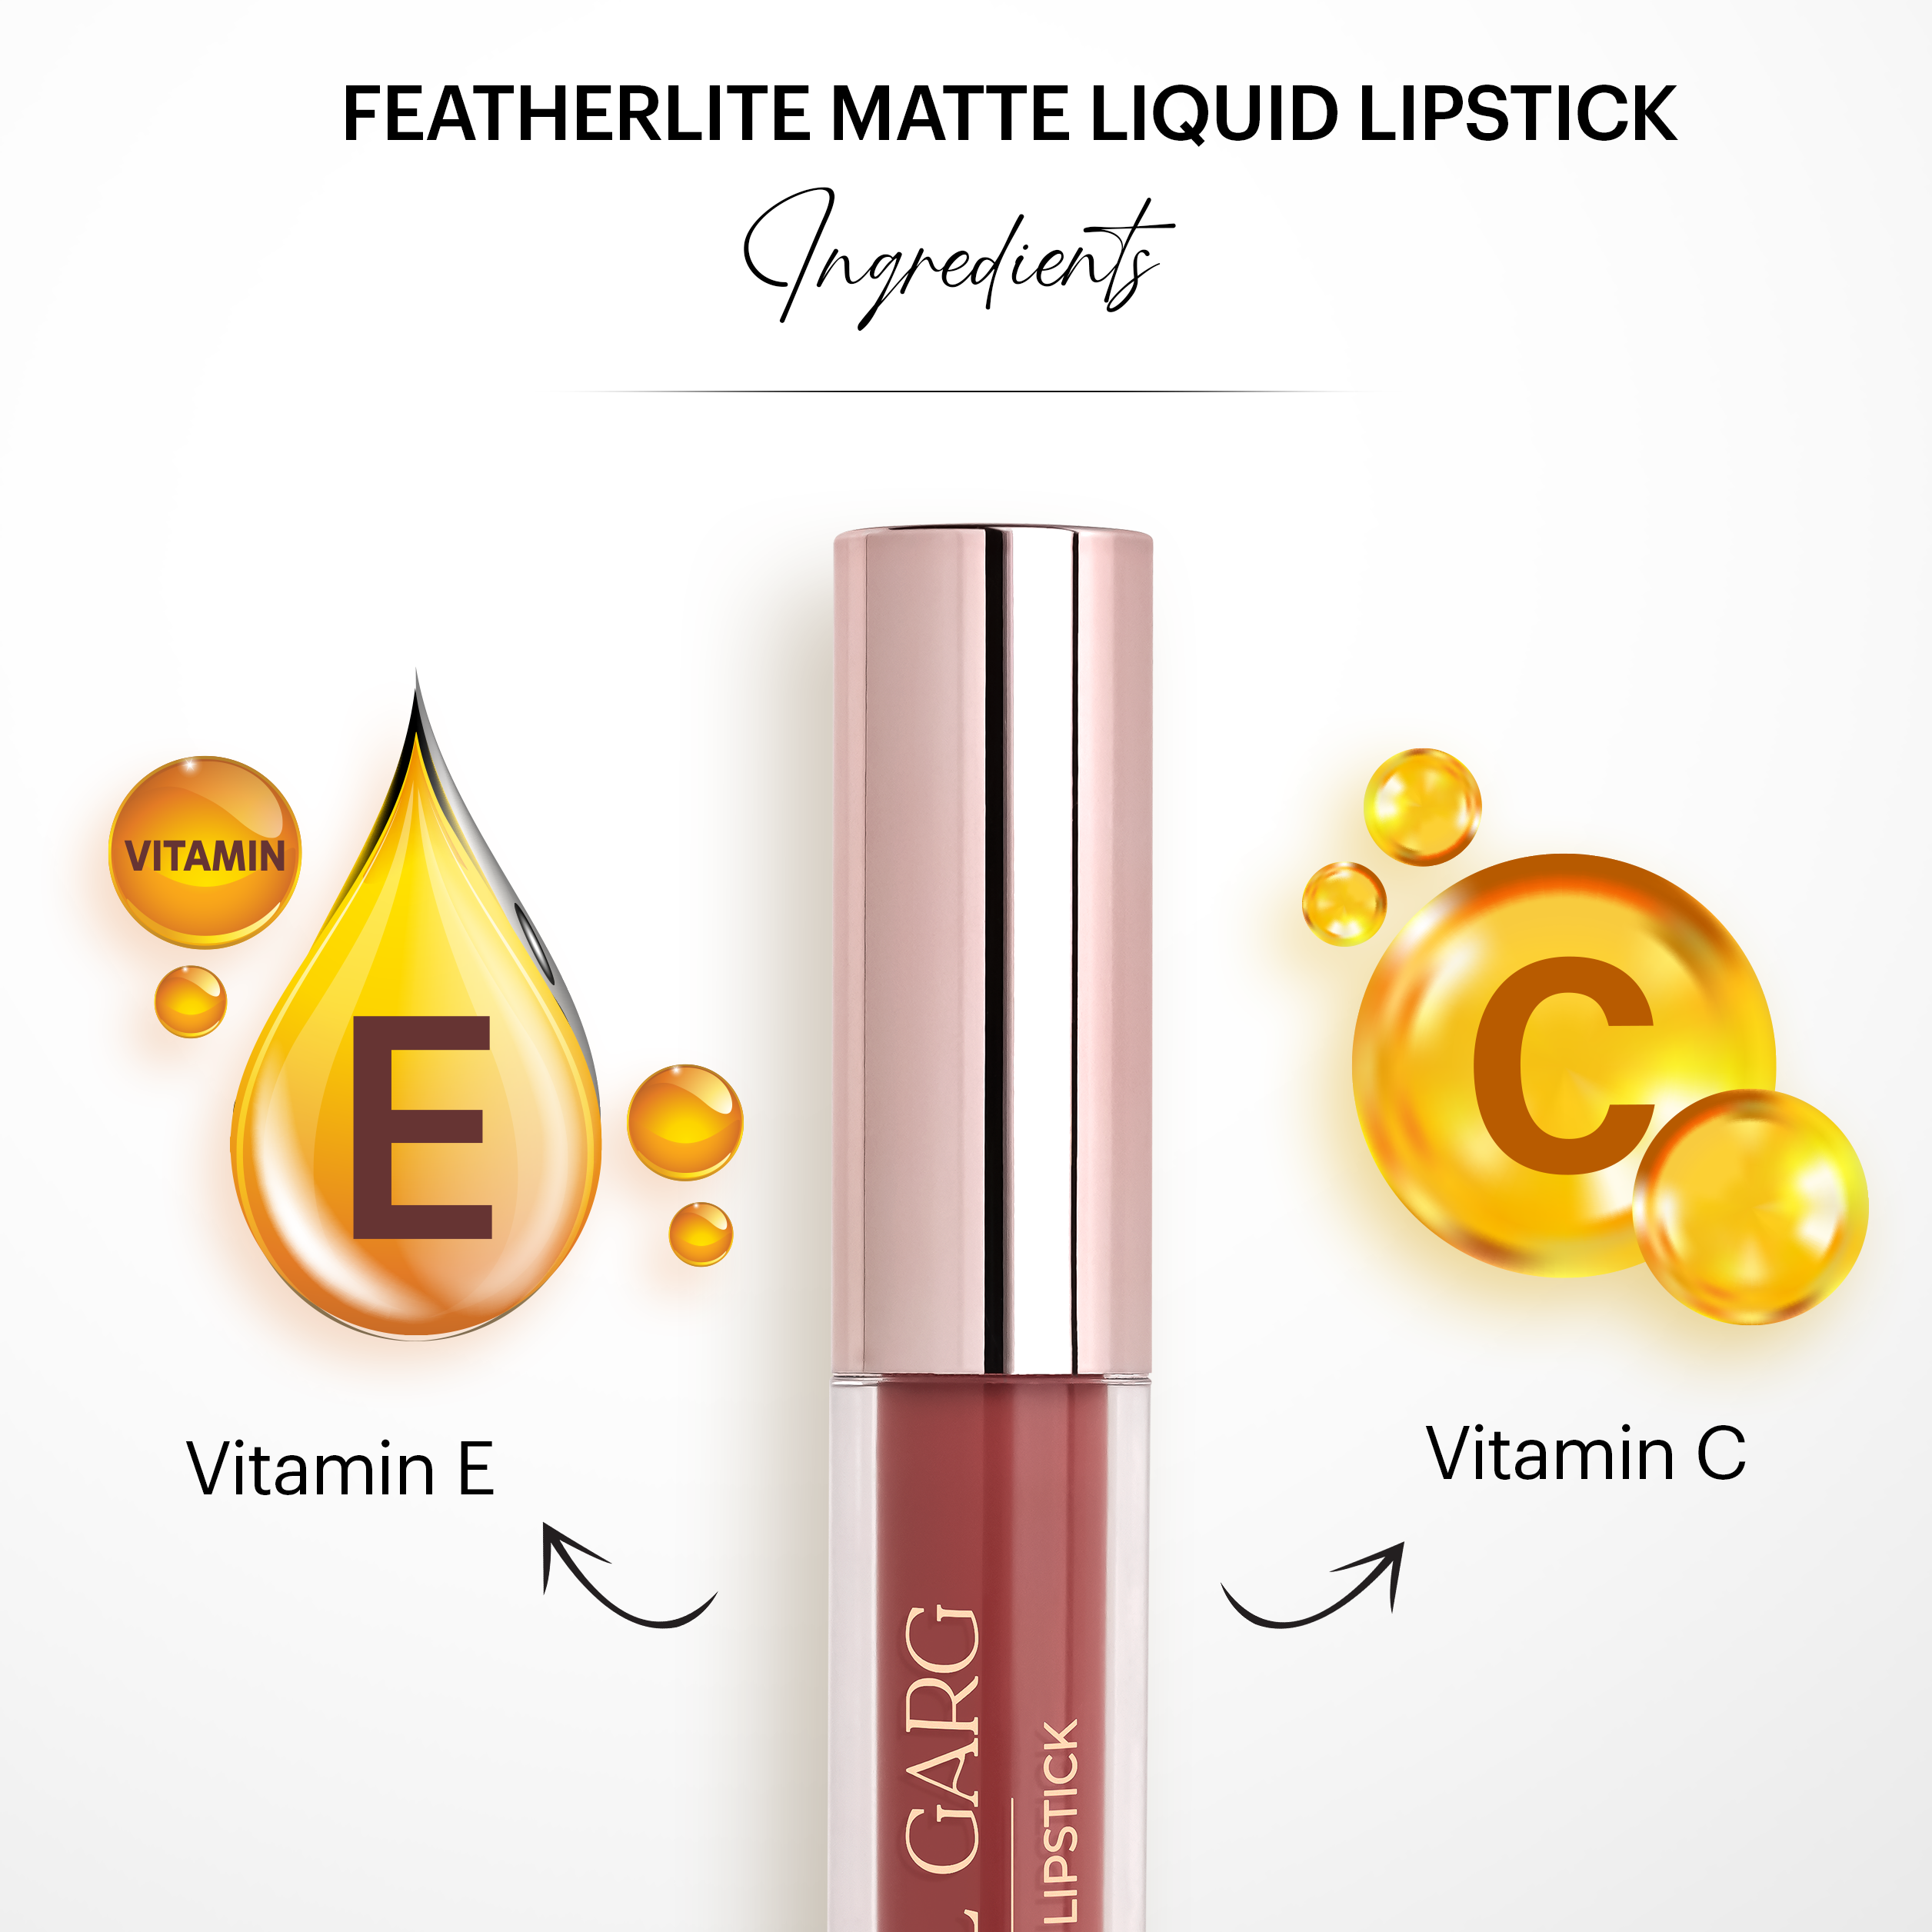 Featherlite Matte Liquid Lipstick: Passion 44